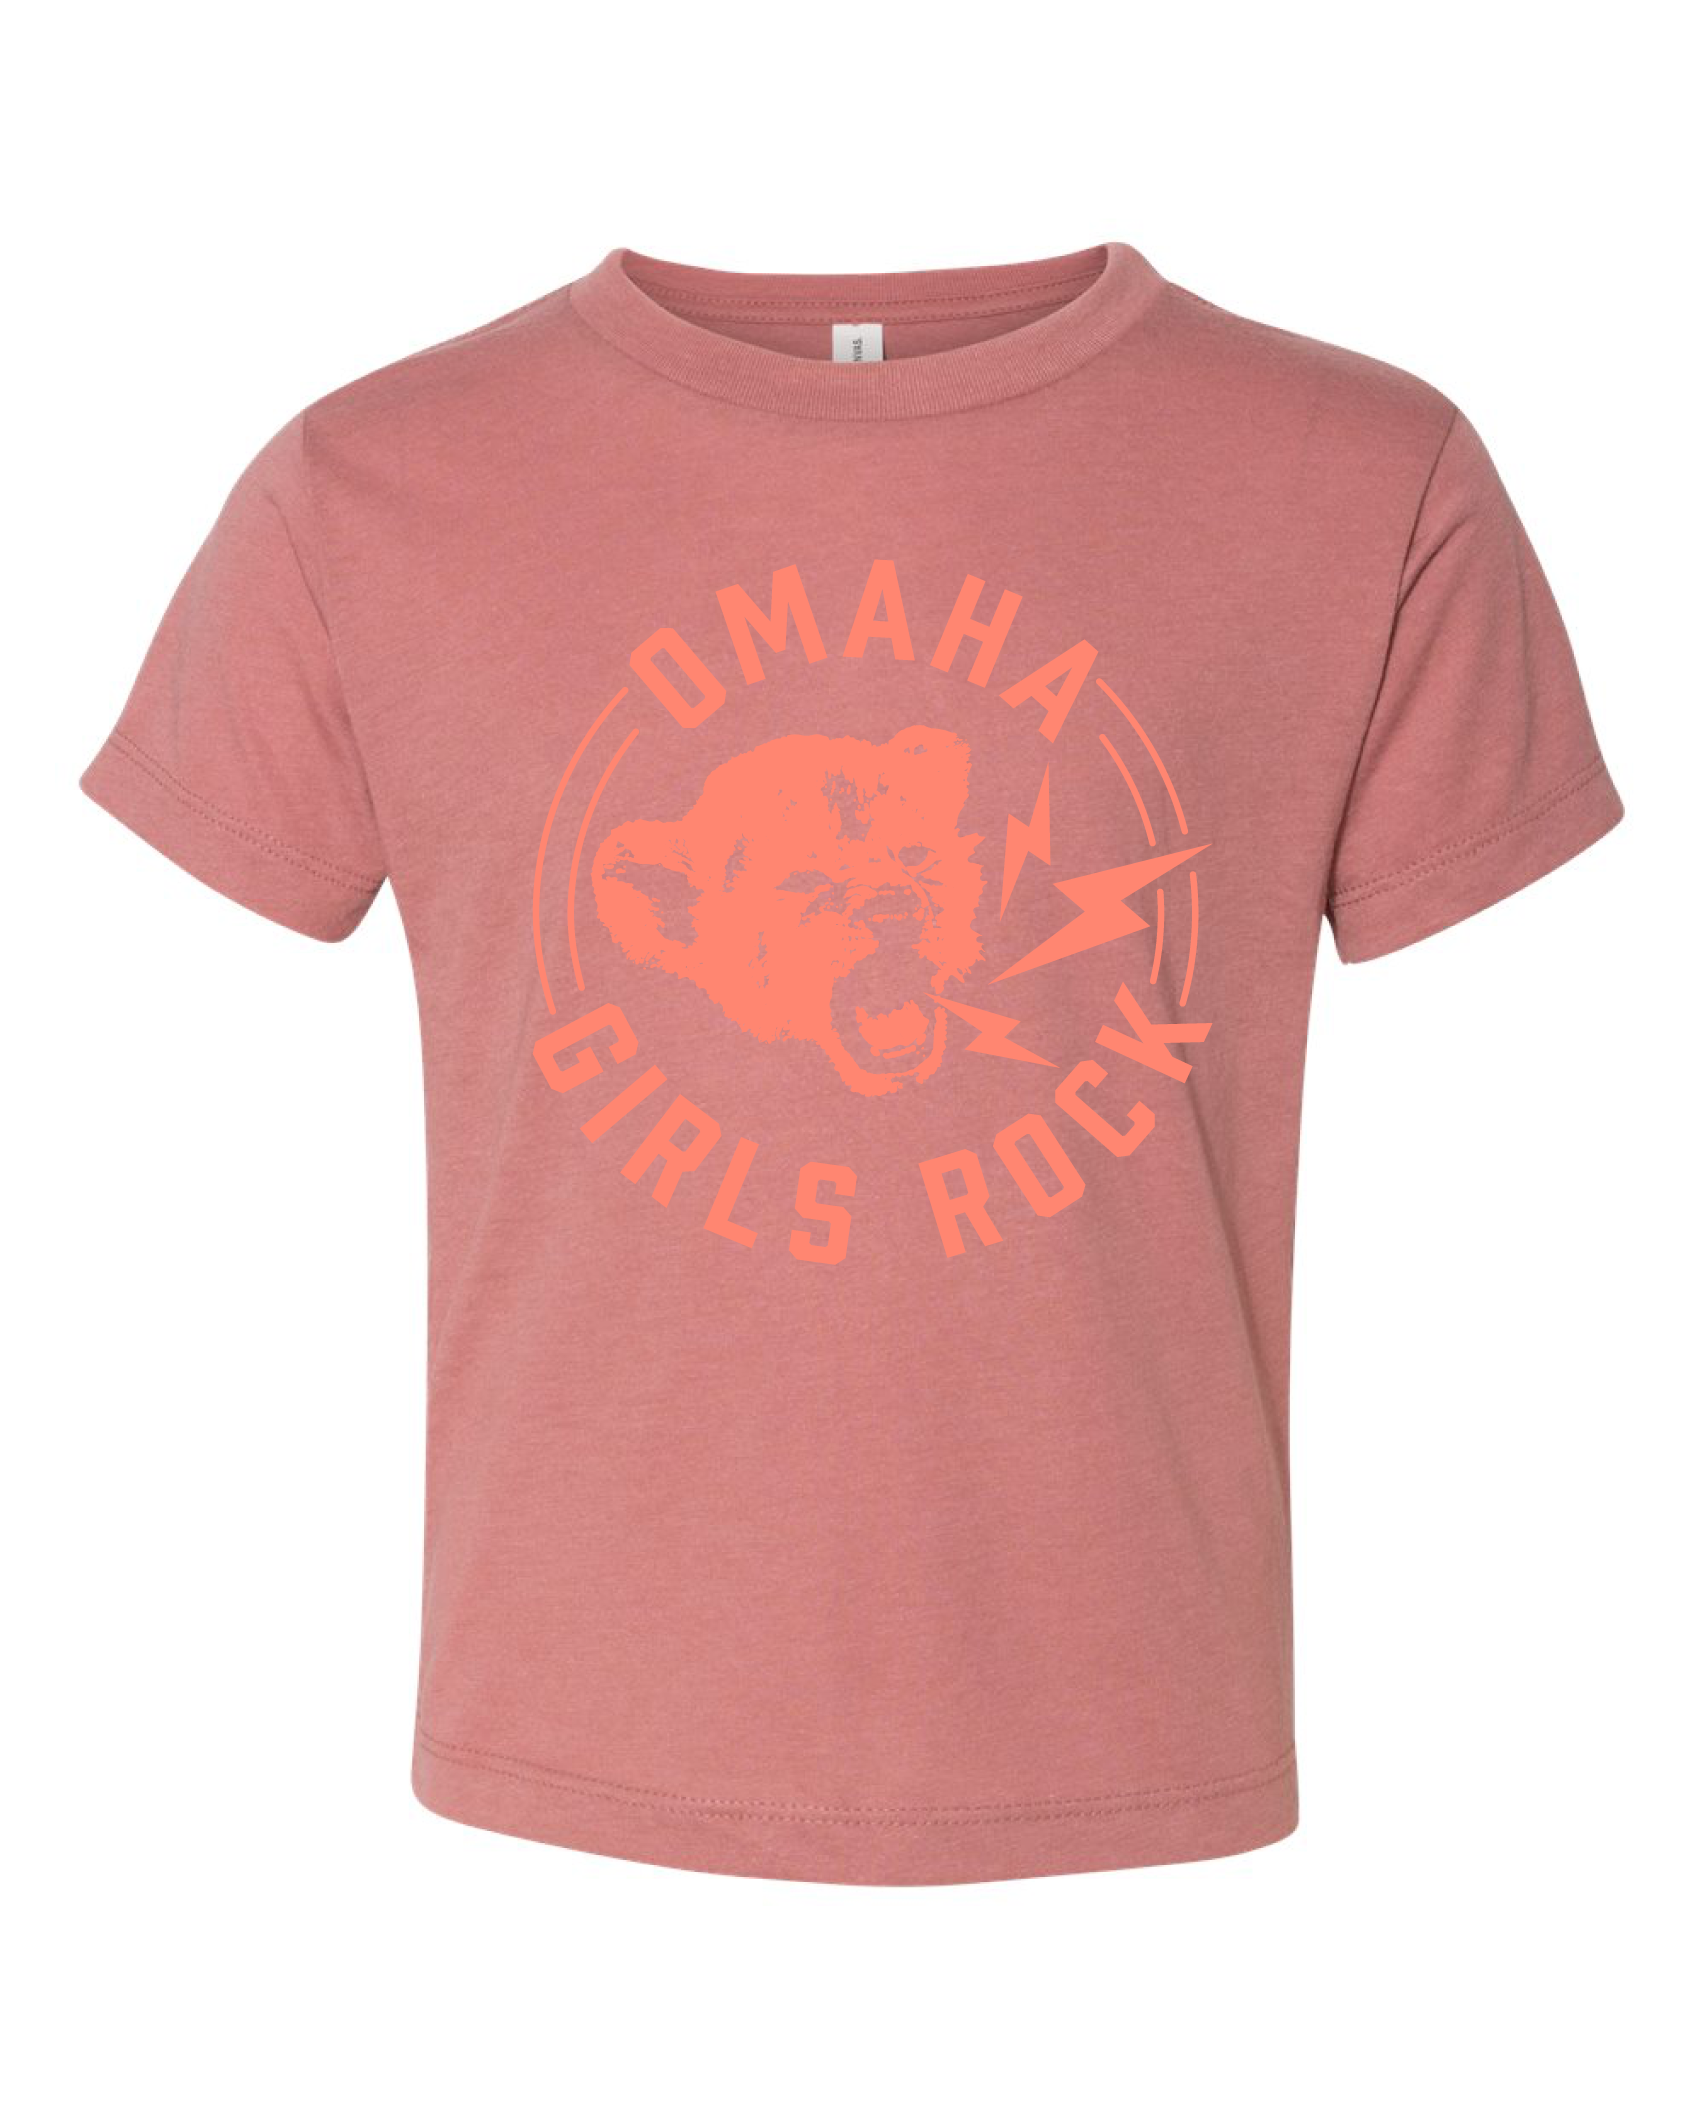 Omaha Girls Rock | Cub Youth T-Shirt